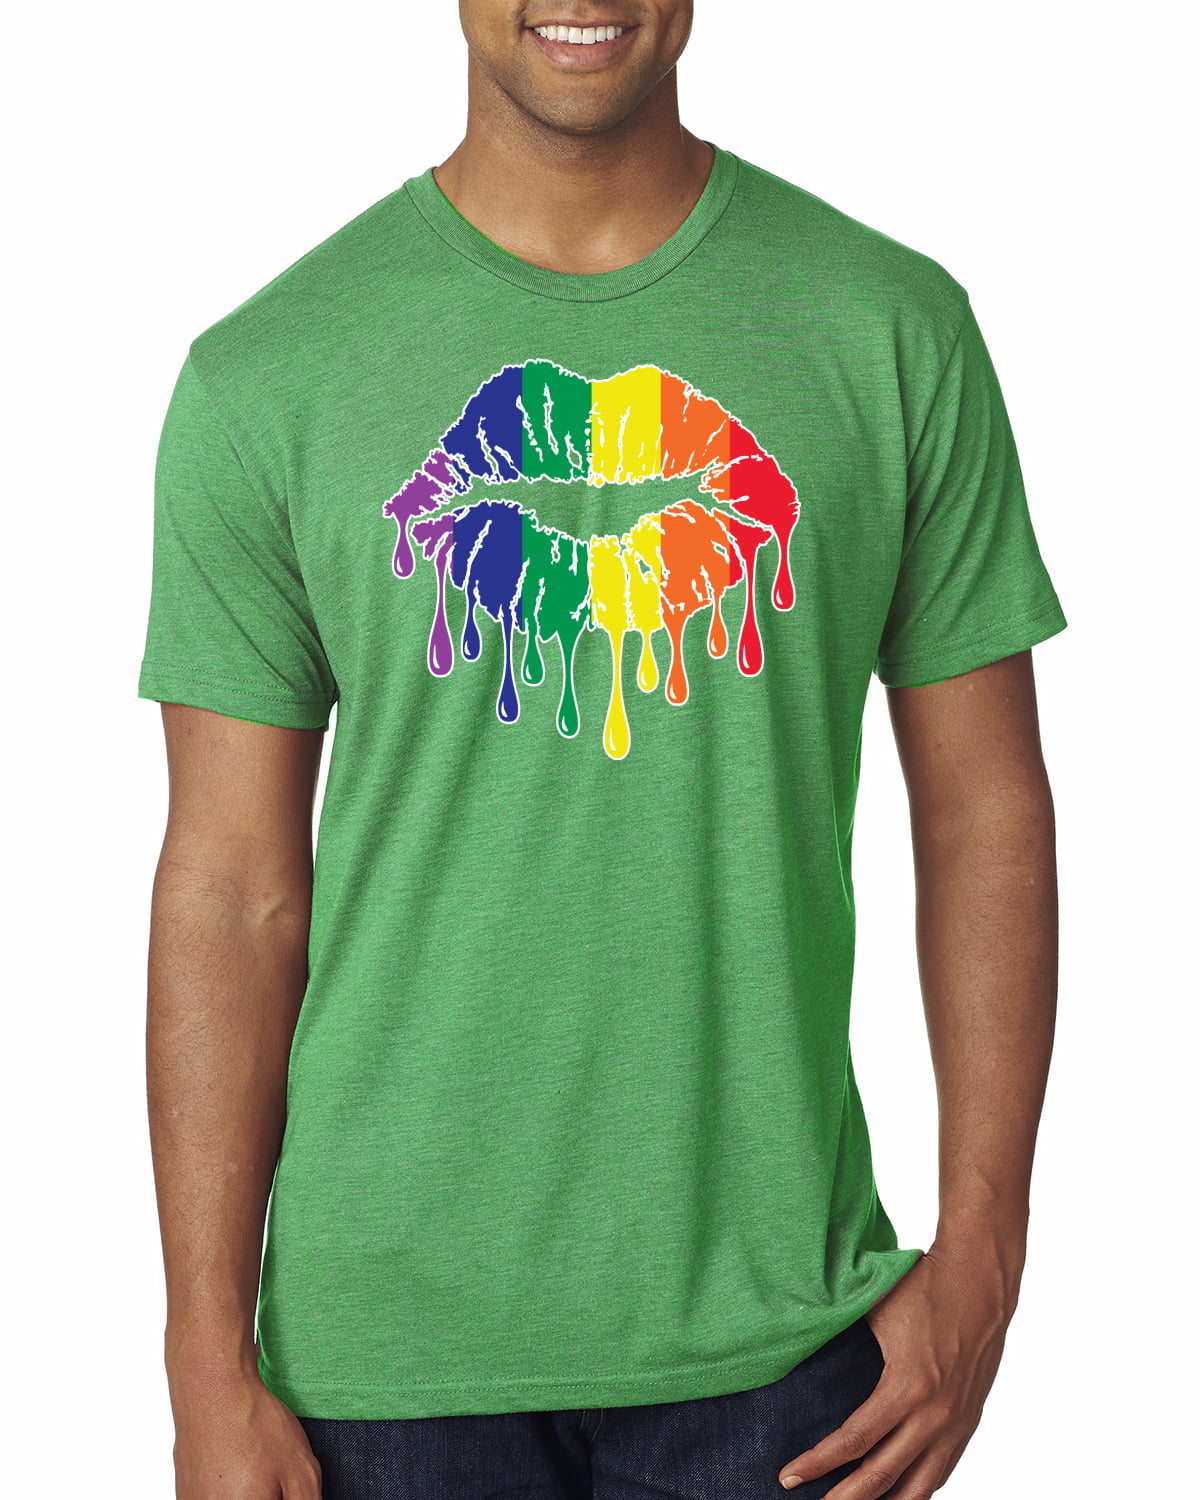 Gender Equality Shirt Gay Pride Shirt Rainbow Pride Shirt Queer Shirt LGBTQ Flag Dripping Lips Shirt Lesbian T-Shirts Bisexual Shirt